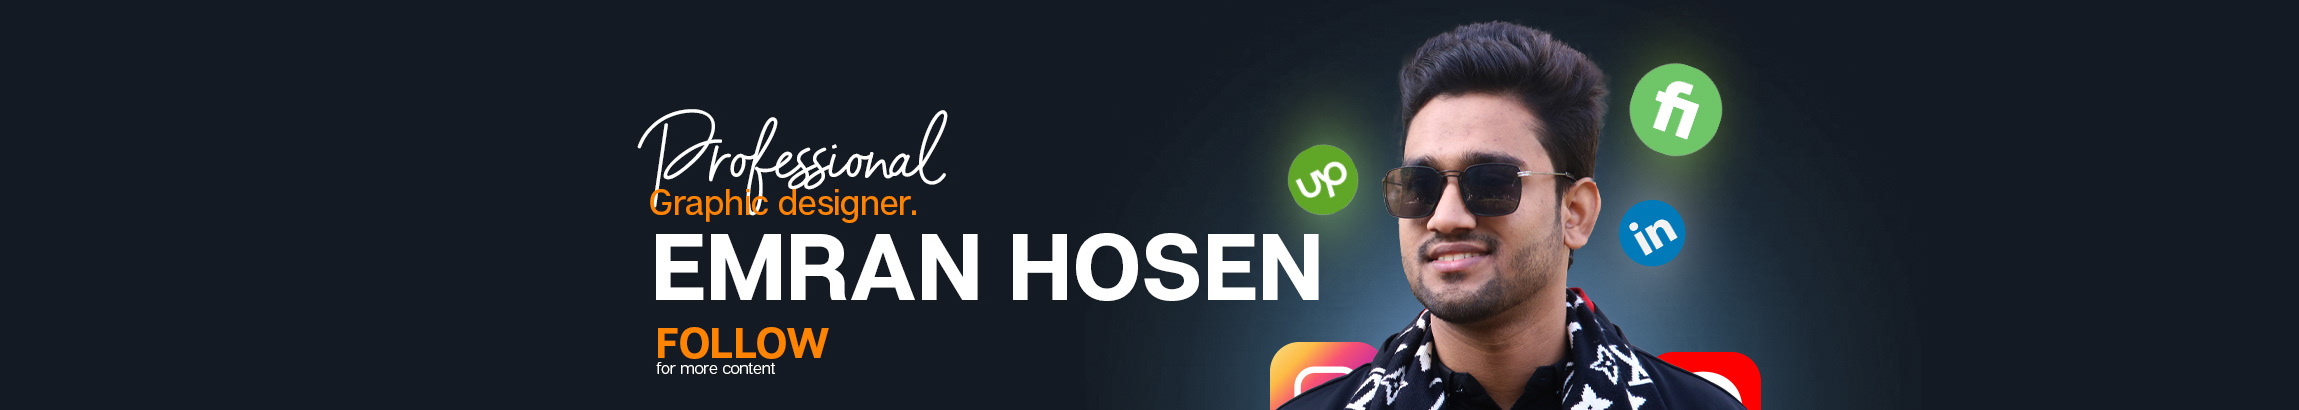 Banner de perfil de Emran Hosen Emon